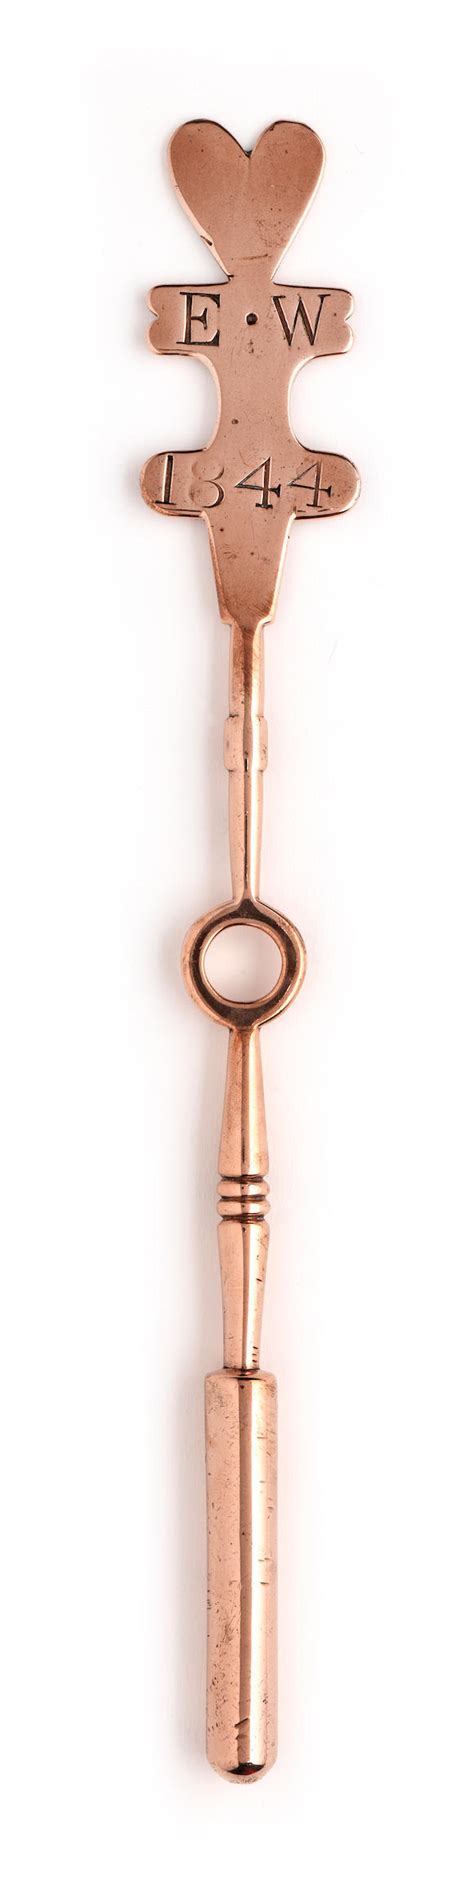 Bonhams A Rare Copper Poking Stick British Dated 1844